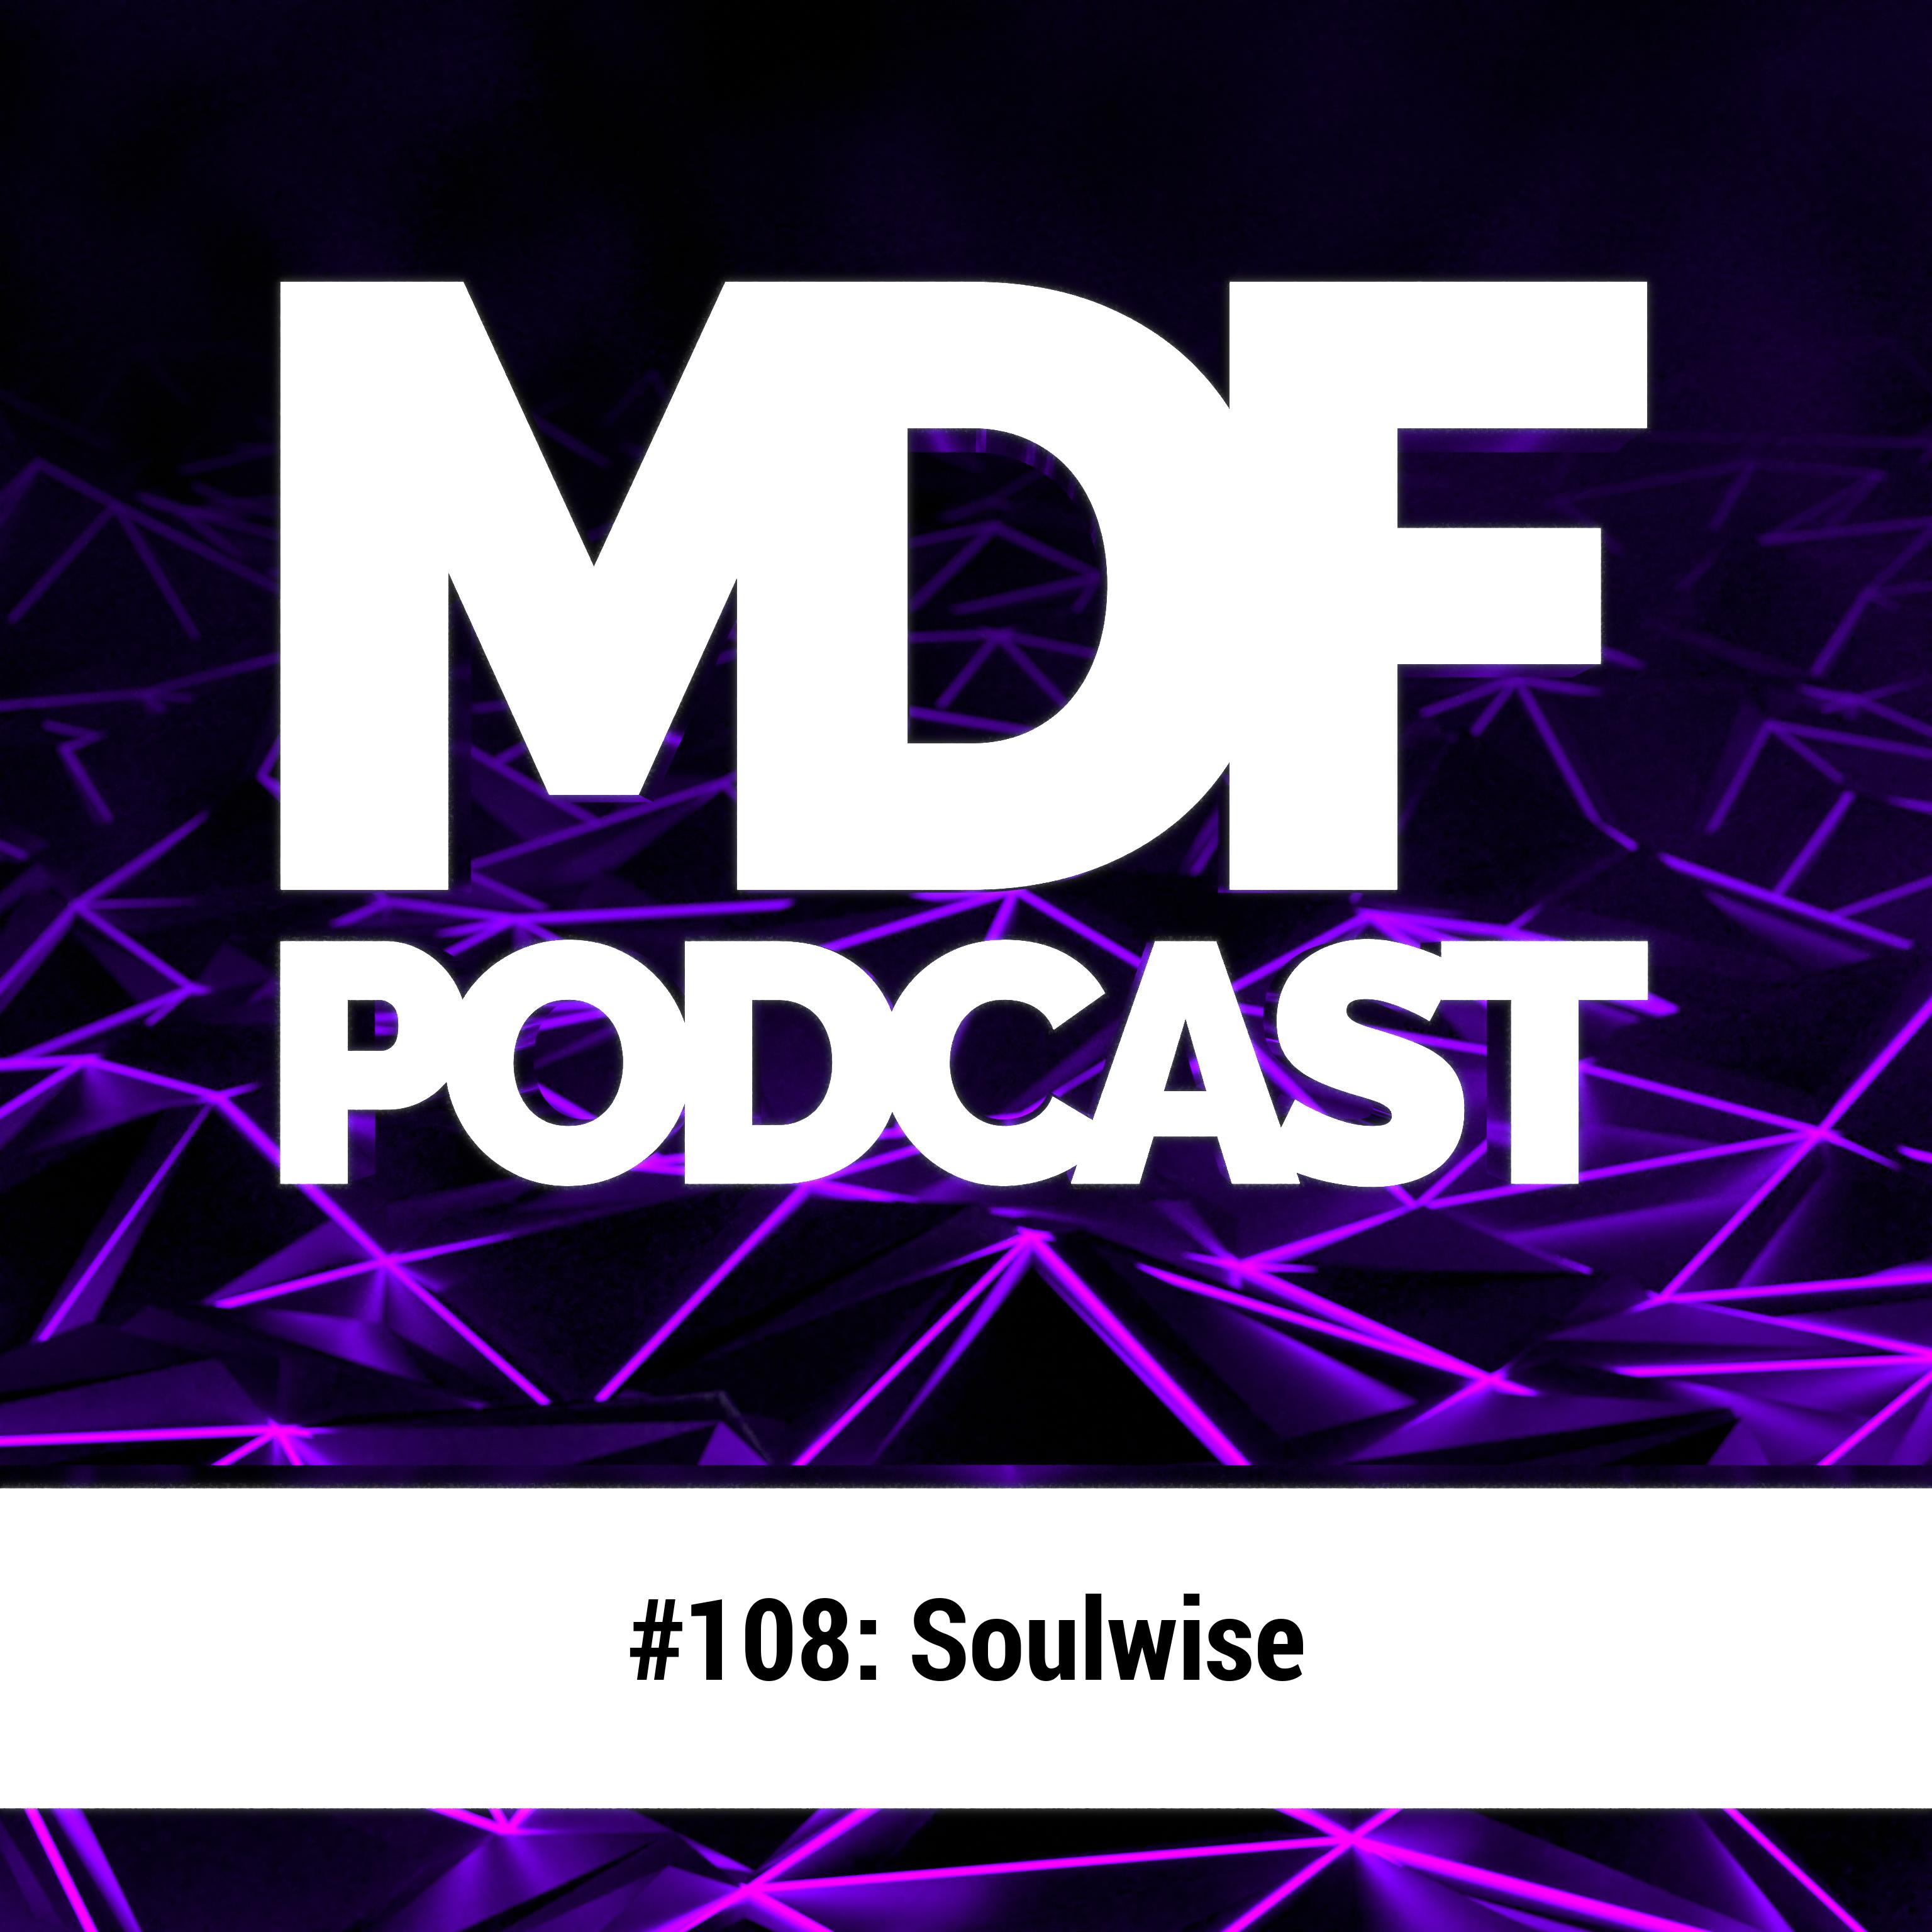 MDF Podcast by Sakonova